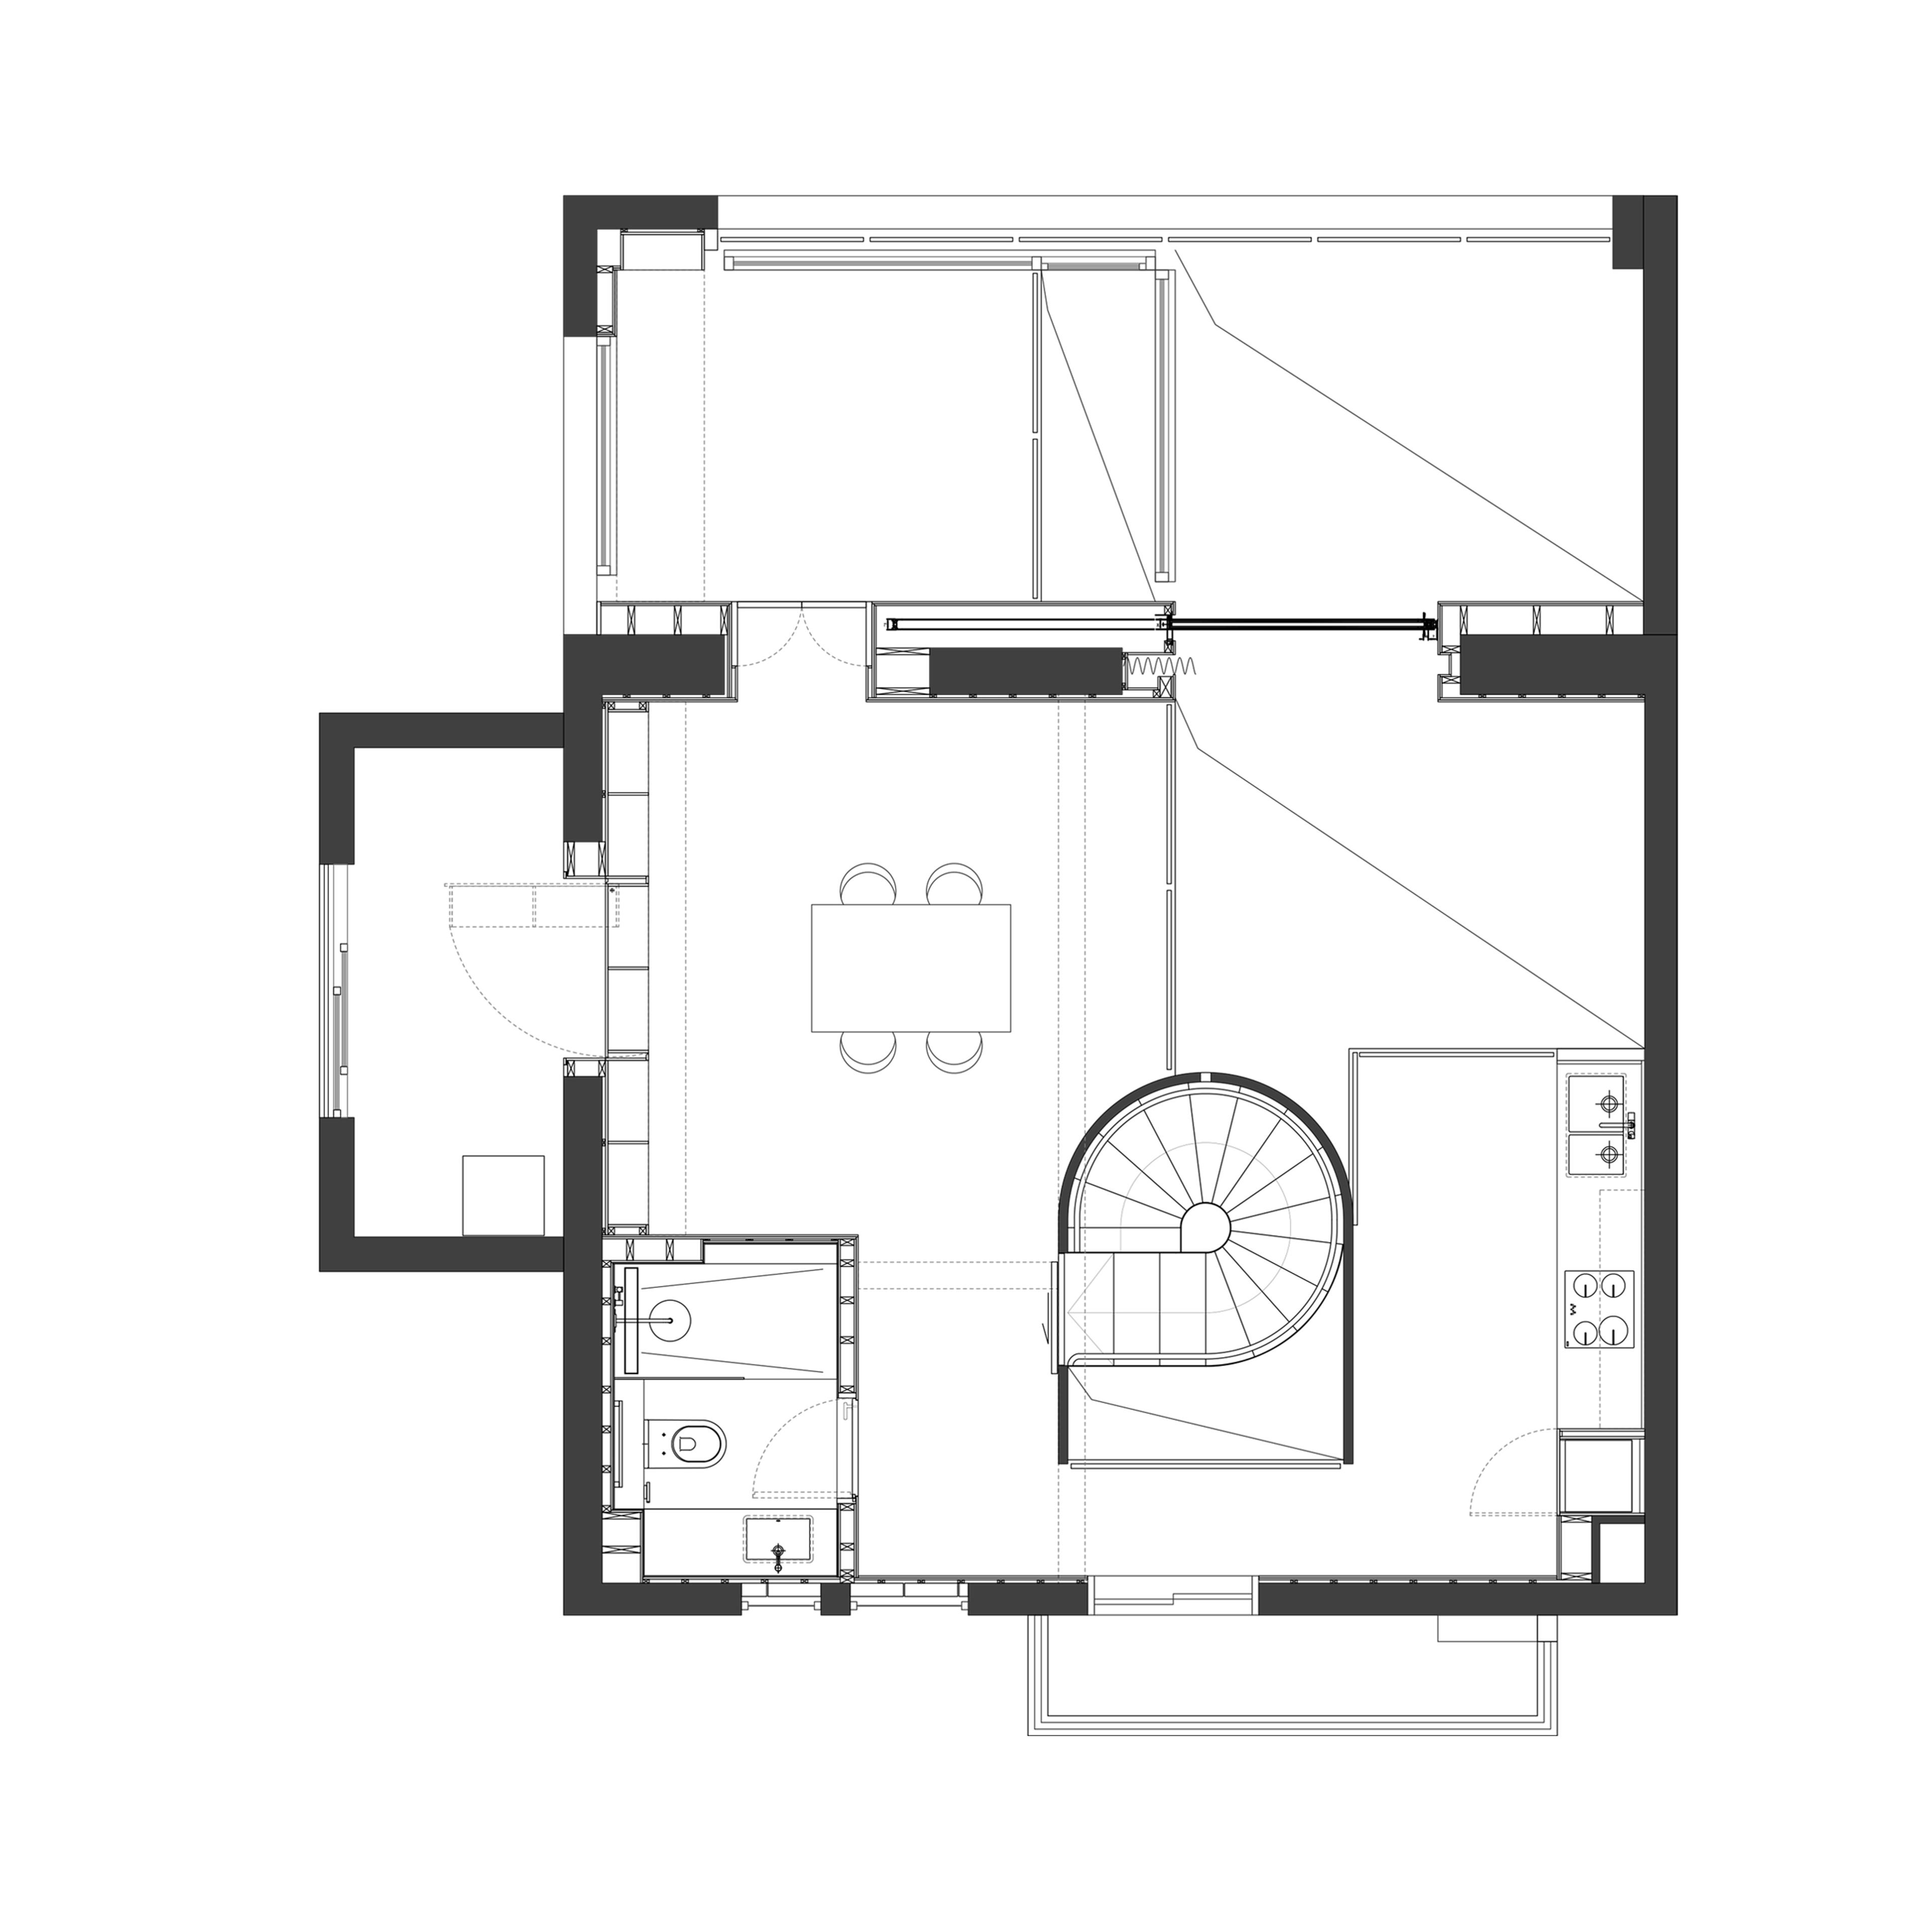 Floor plan for an apartment